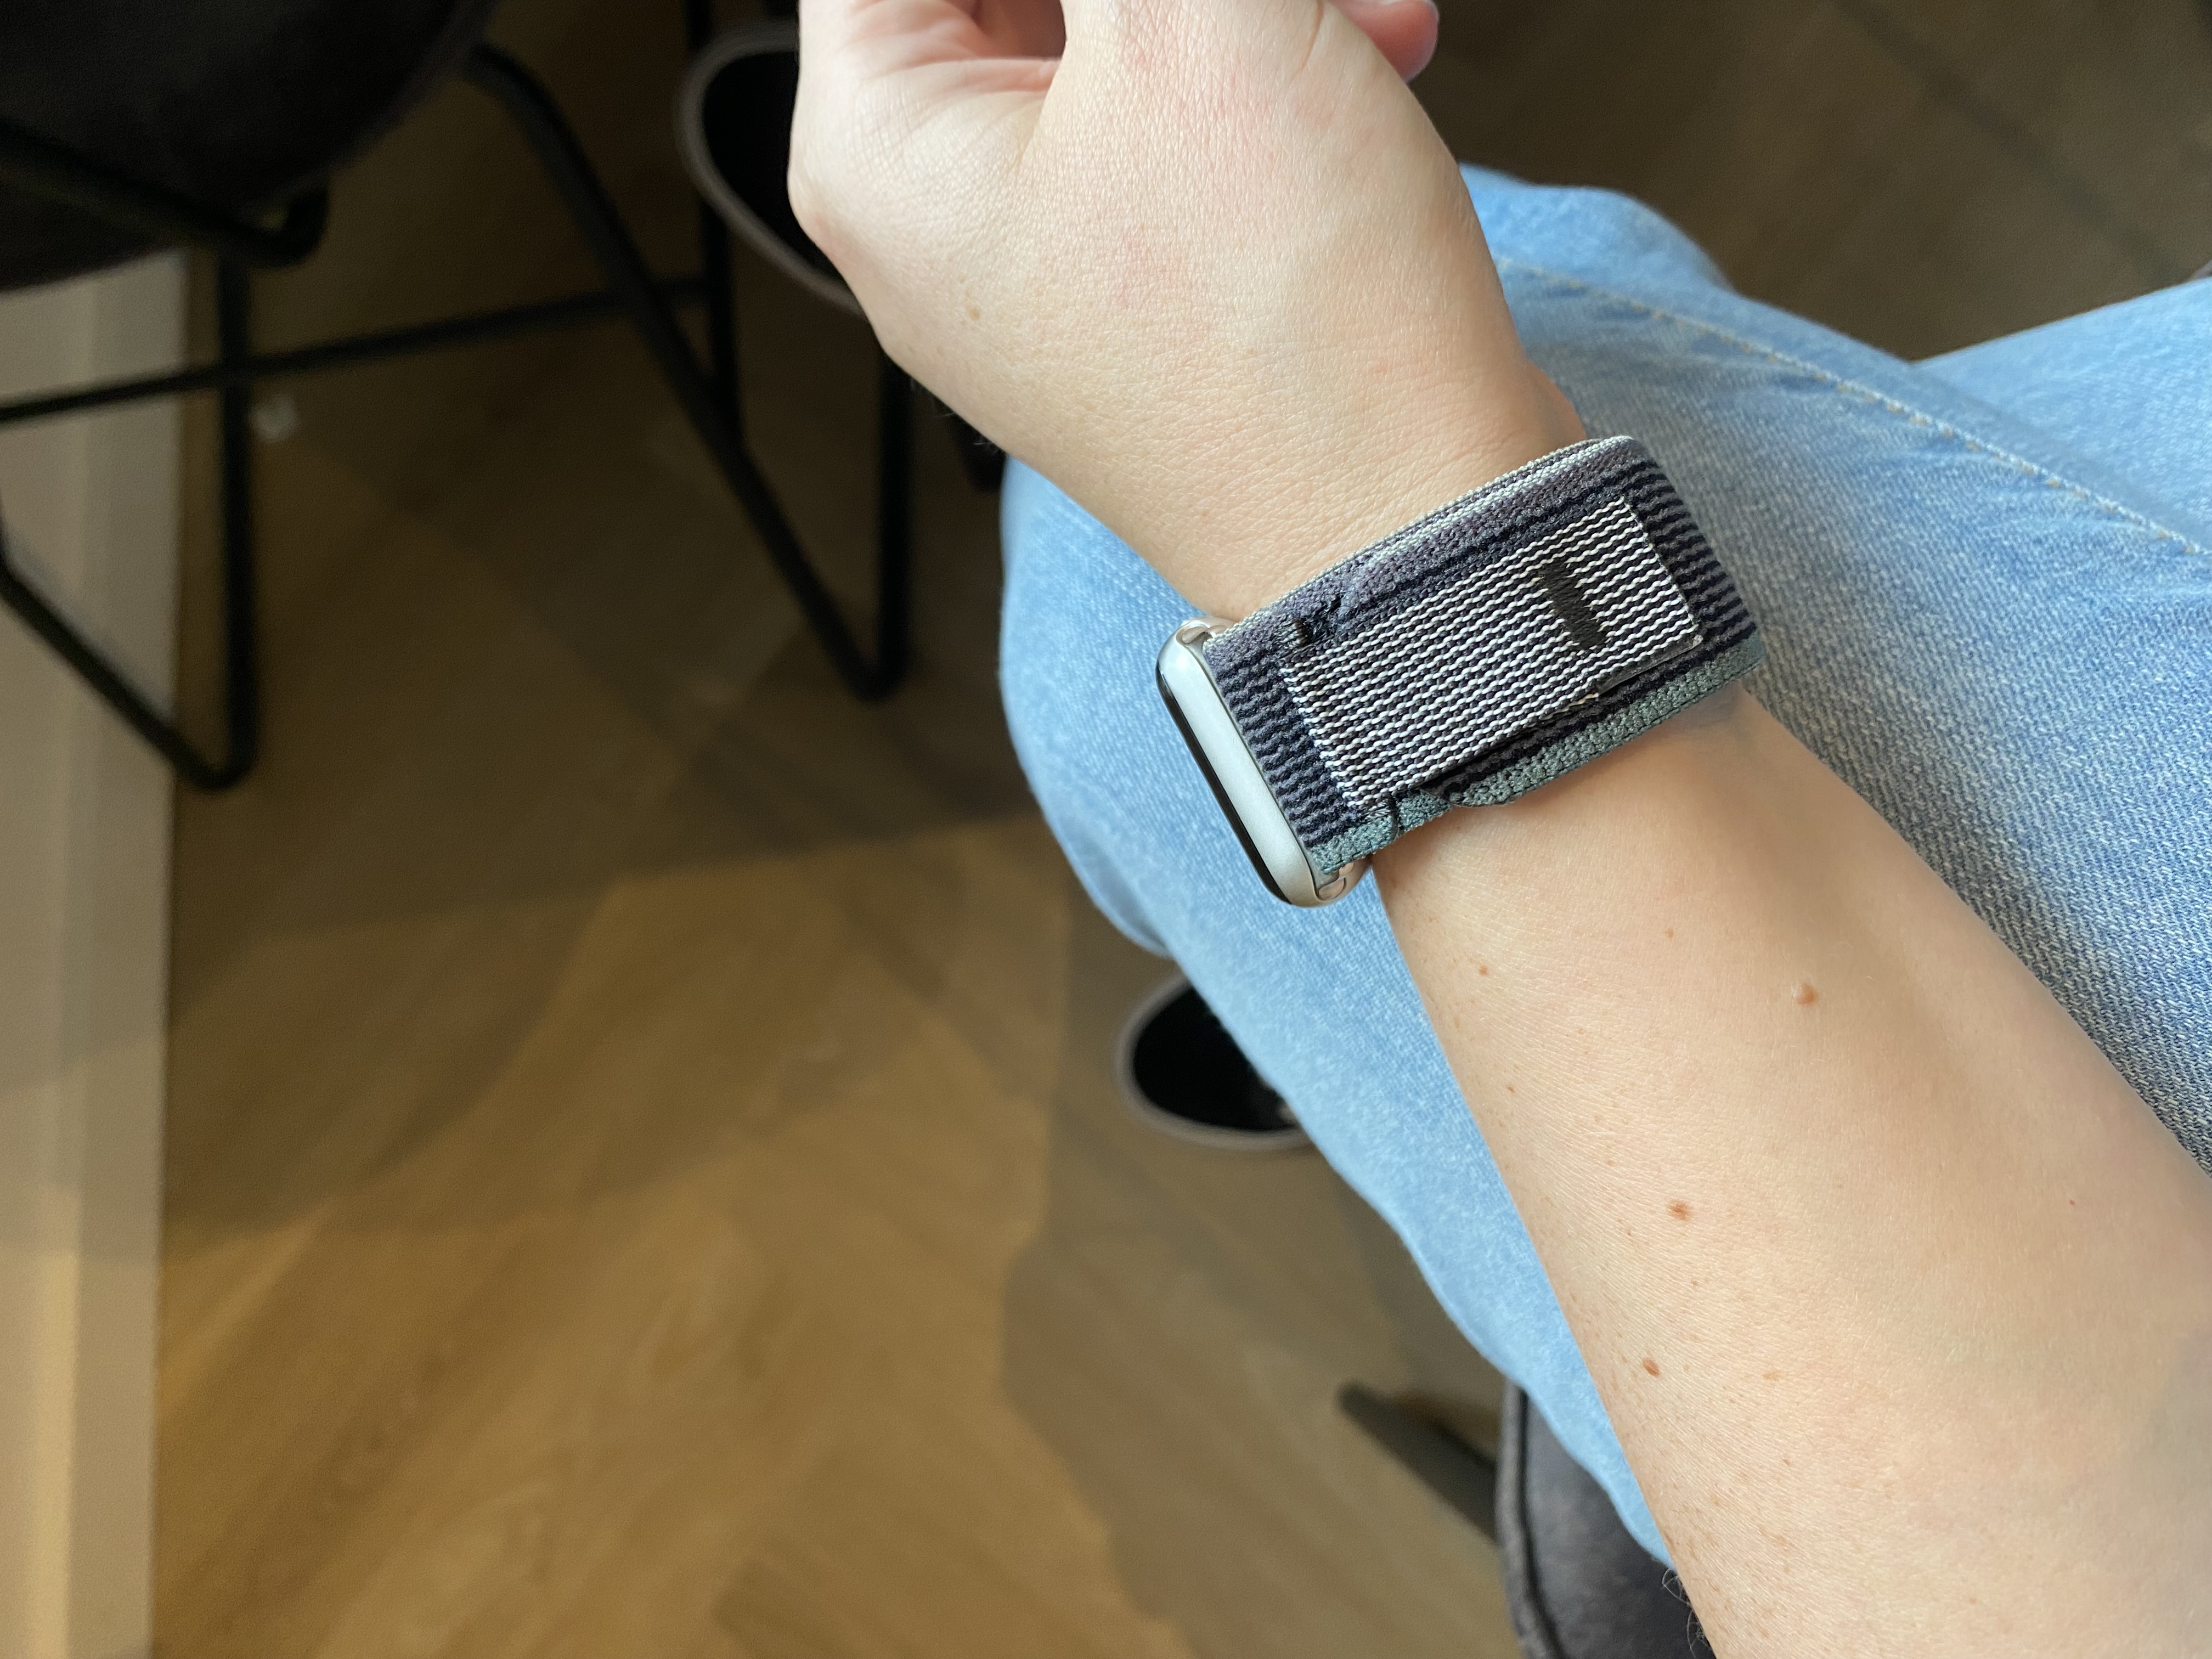 Cinturino trail in nylon per Apple Watch - blu nero